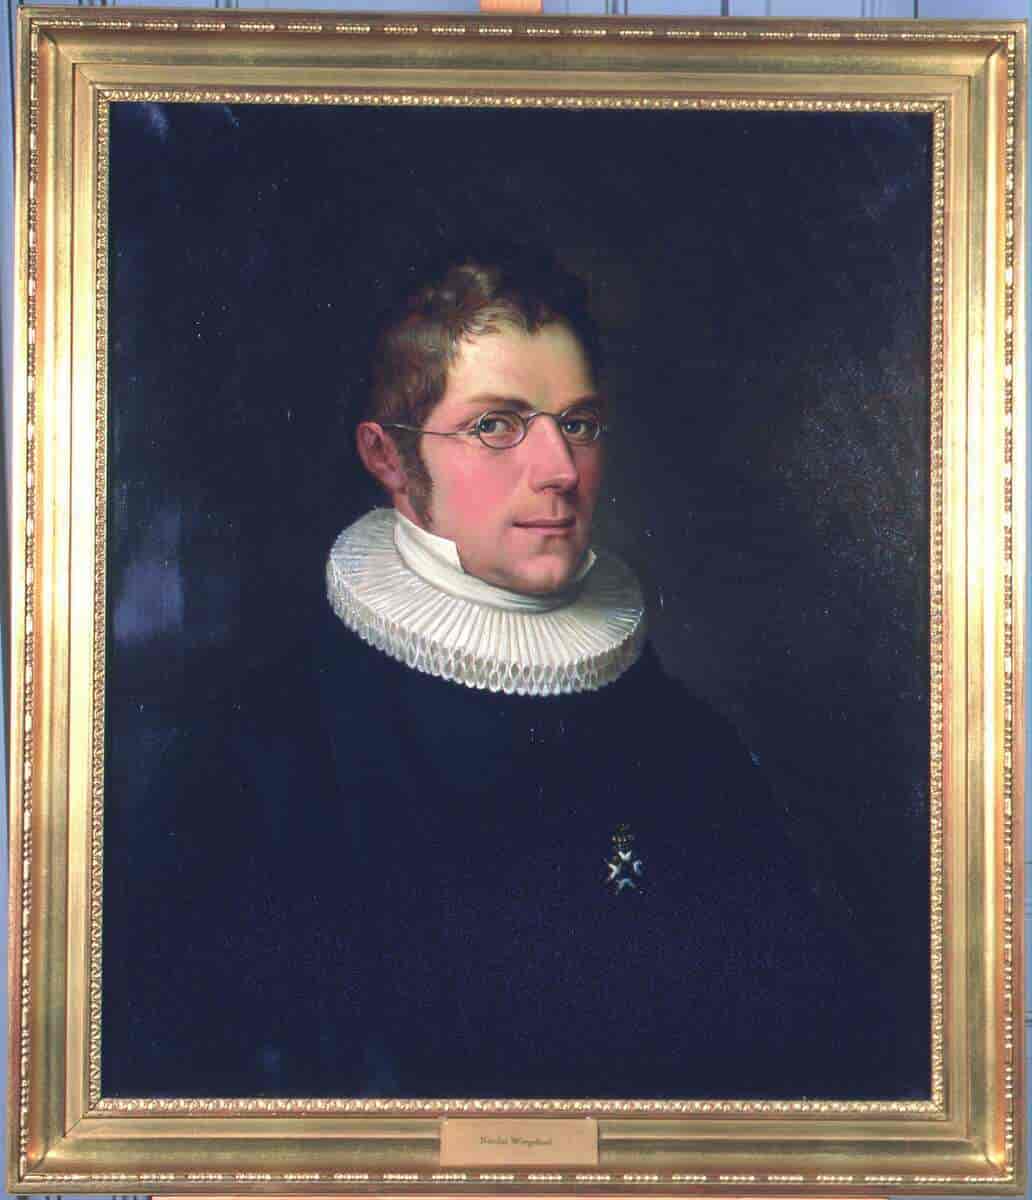 Portrett av Nicolai Wergeland i prestekjole med Norstjärneorden